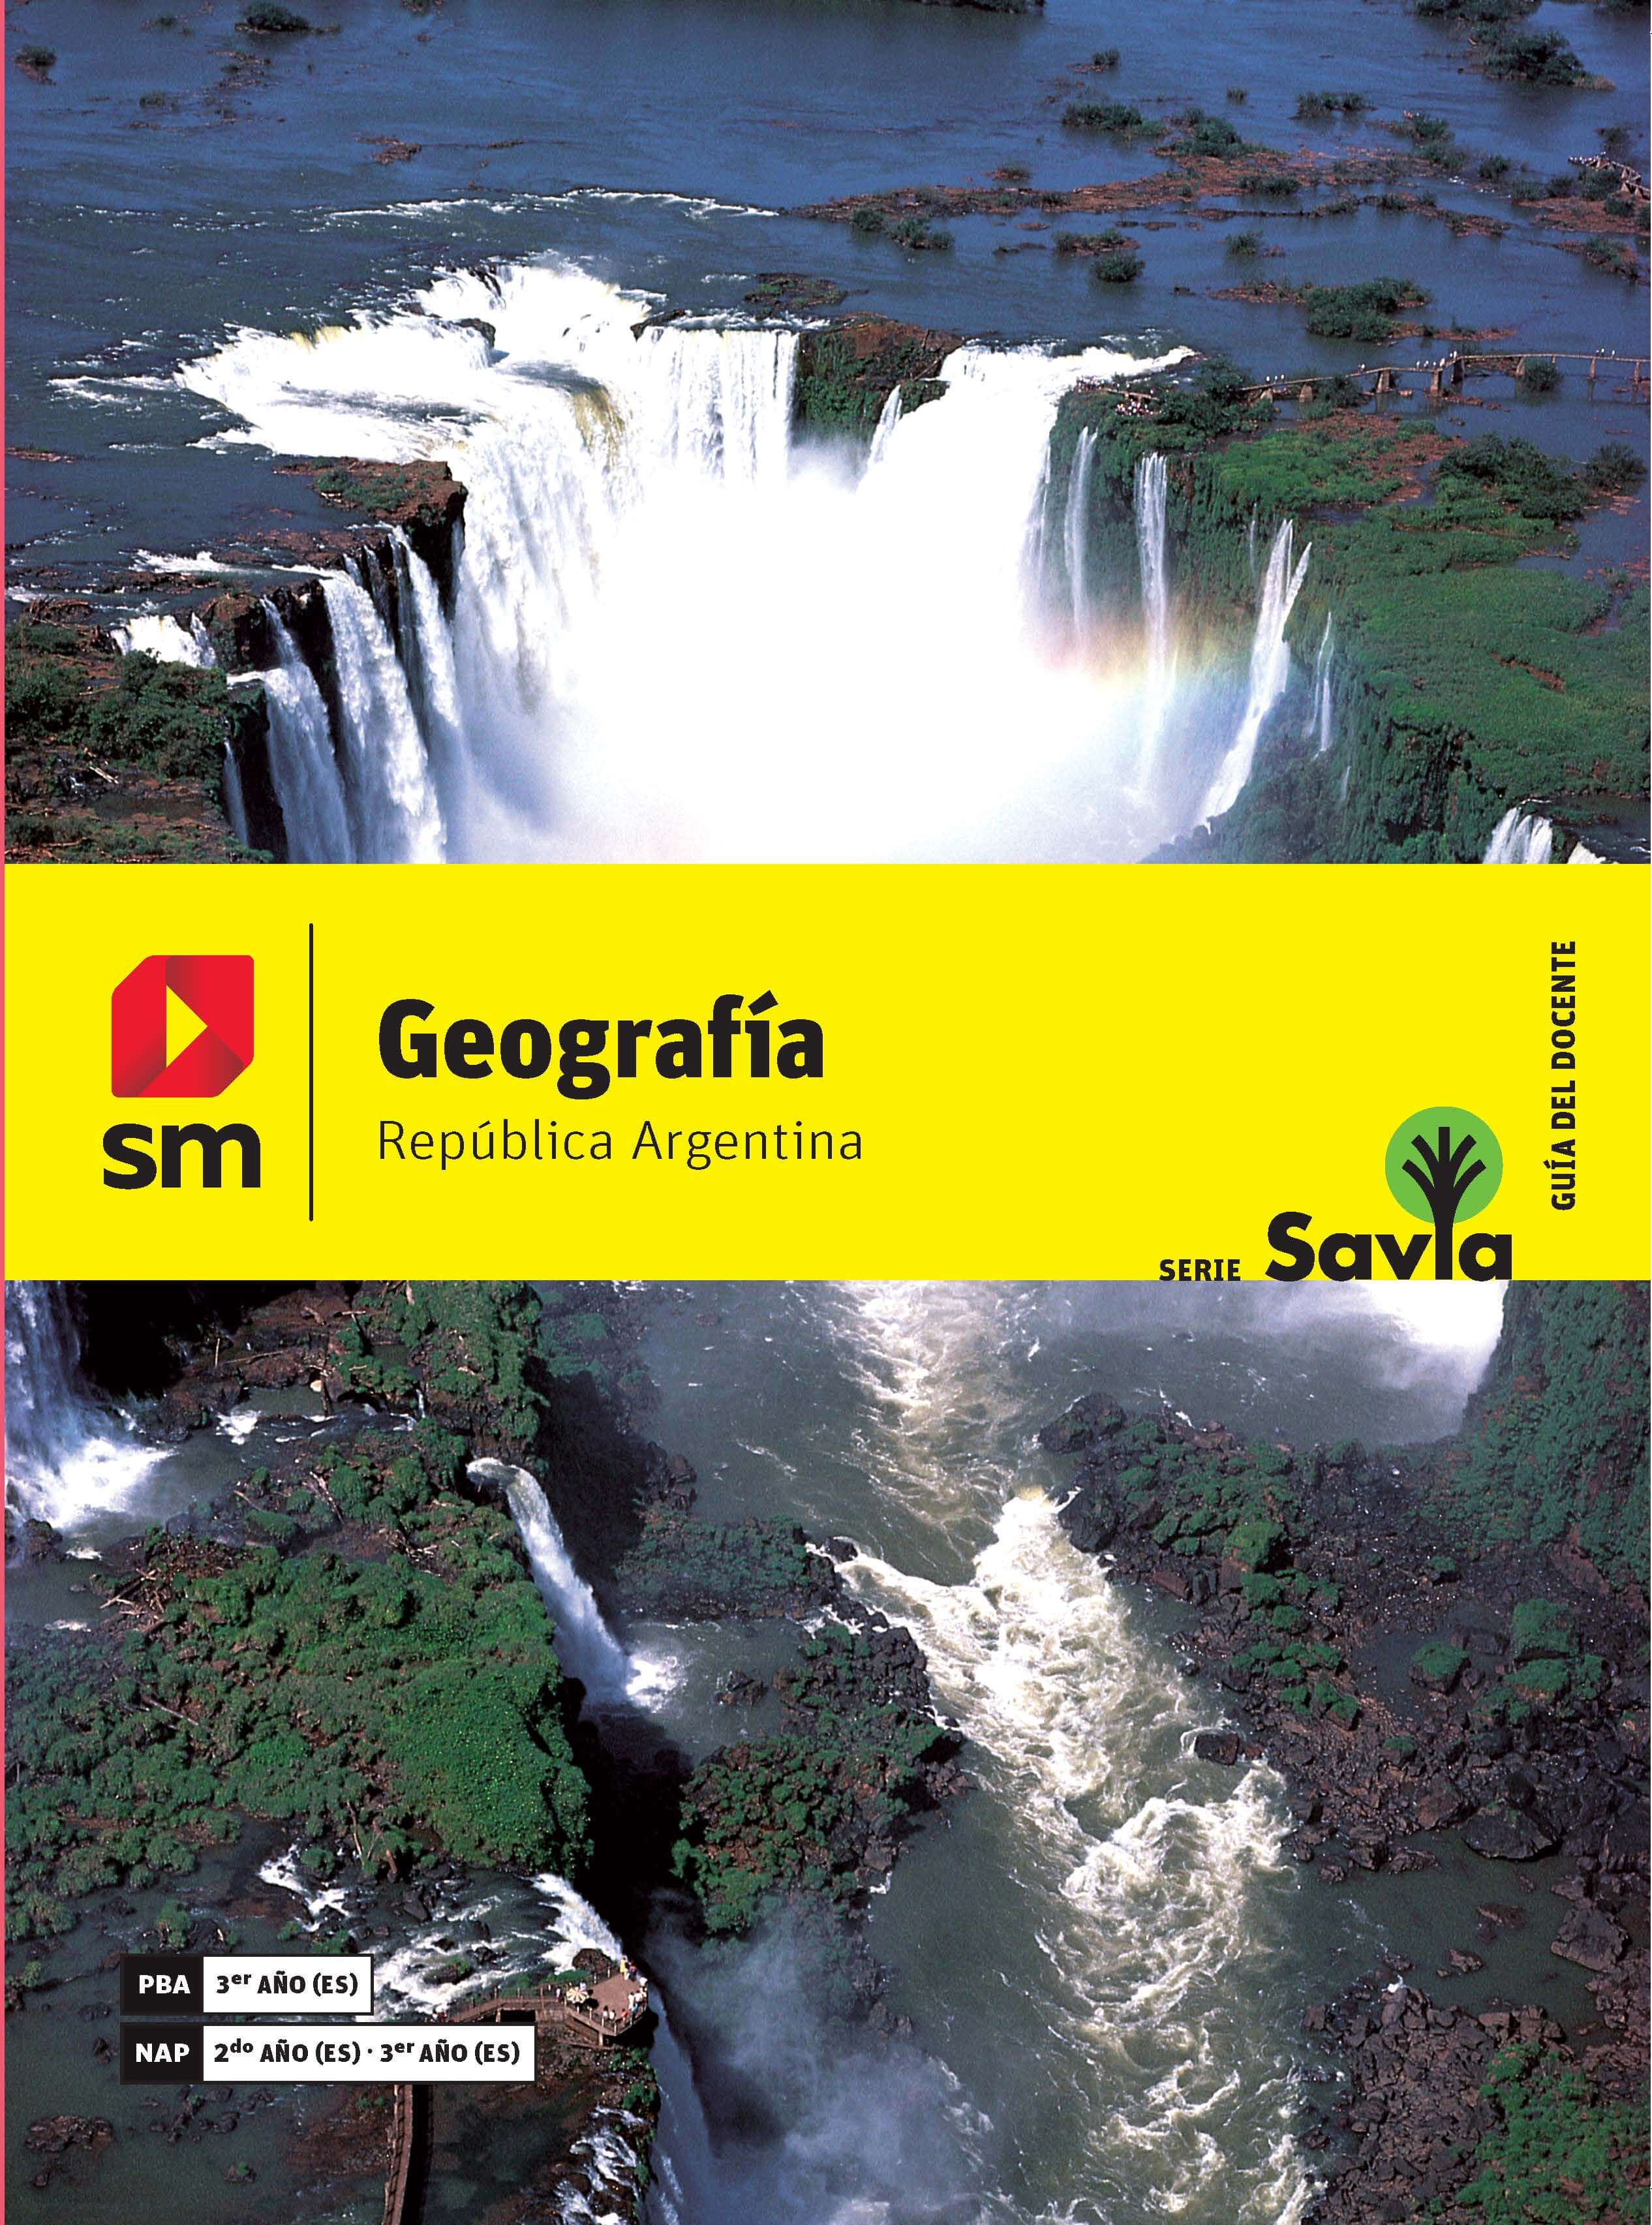 Geografía. República Argentina - Serie Savia (Material docente)